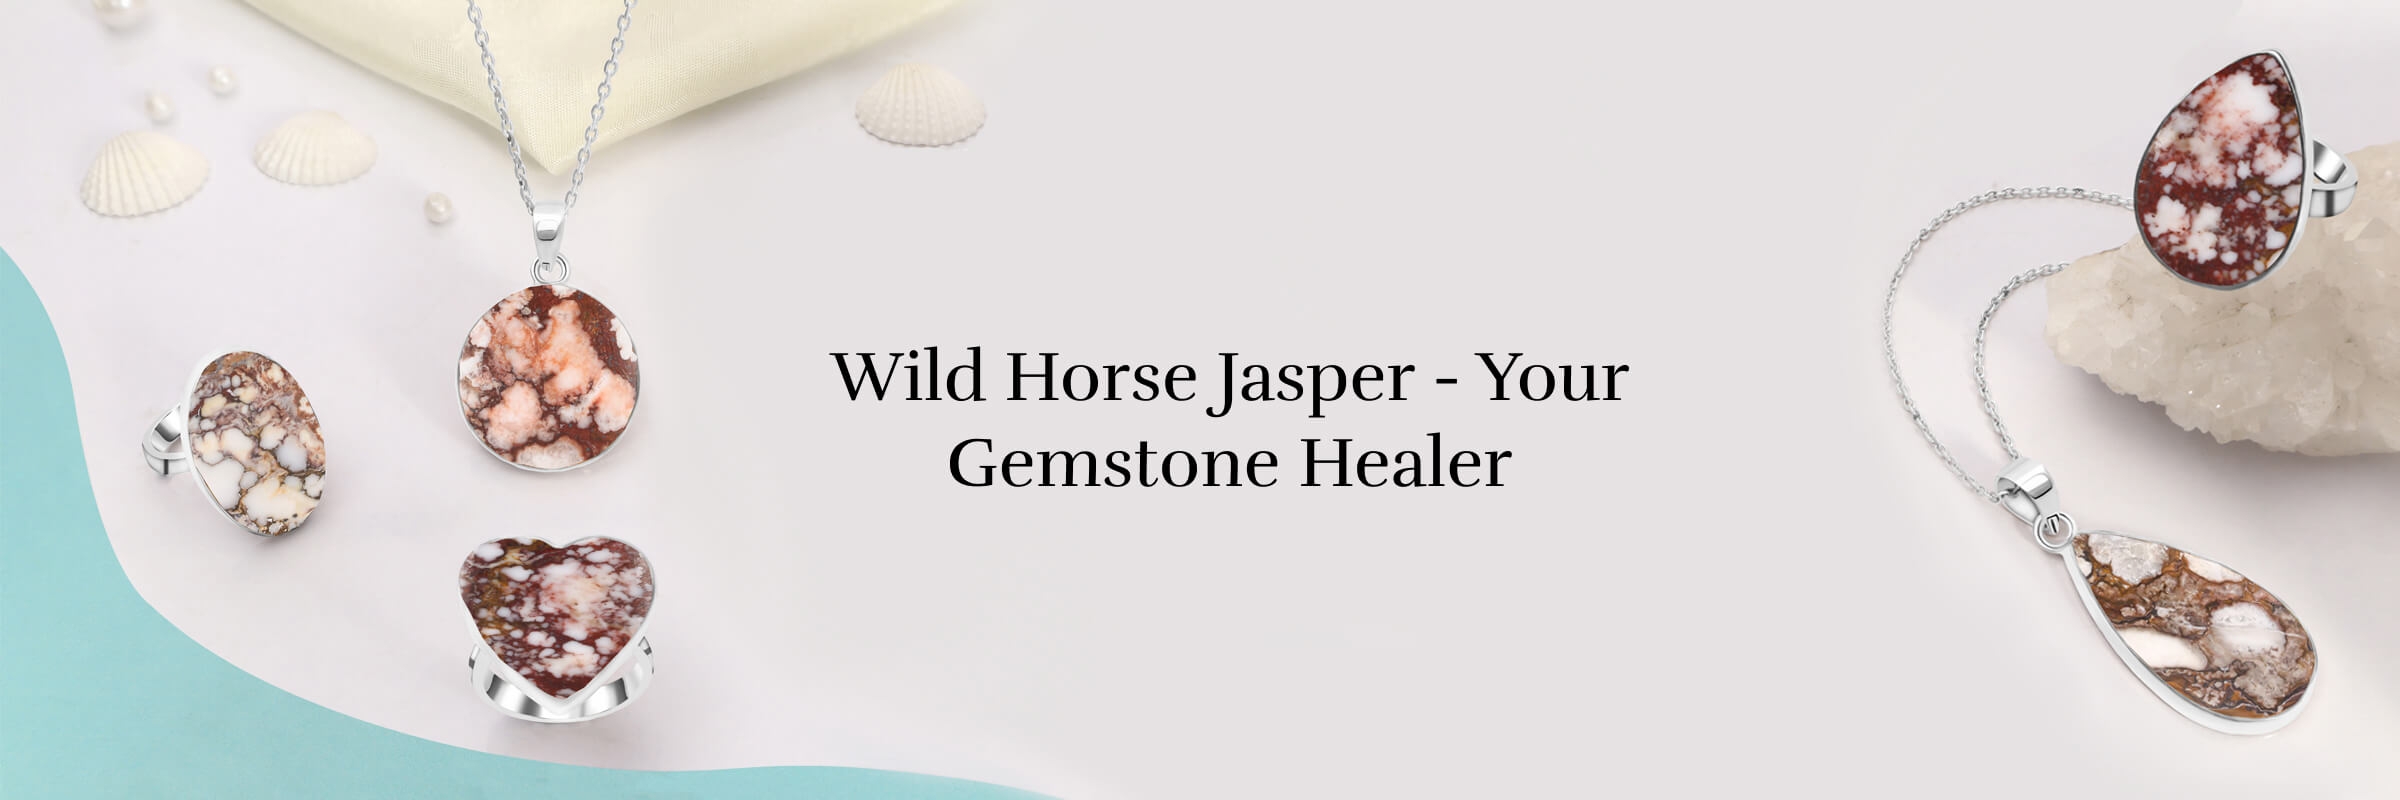 Healing Properties of Wild Horse Jasper Gemstone